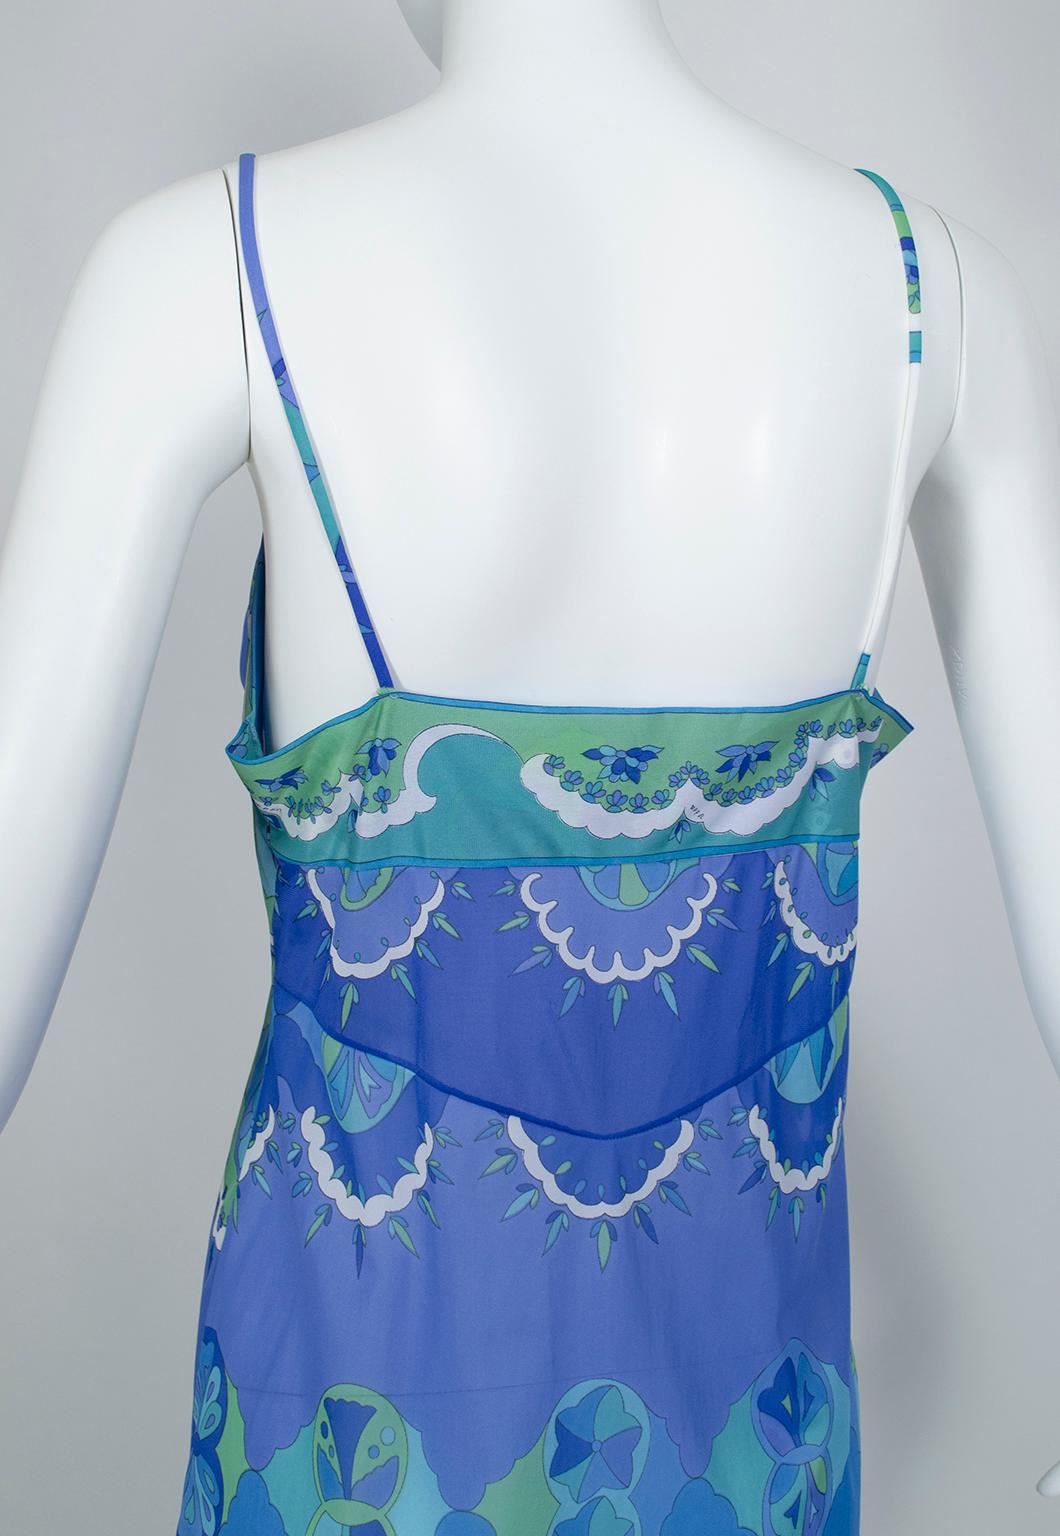 Emilio Pucci Formfit Rogers Blue Palette Negligée Slip Mini Dress - Small, 1960s 2